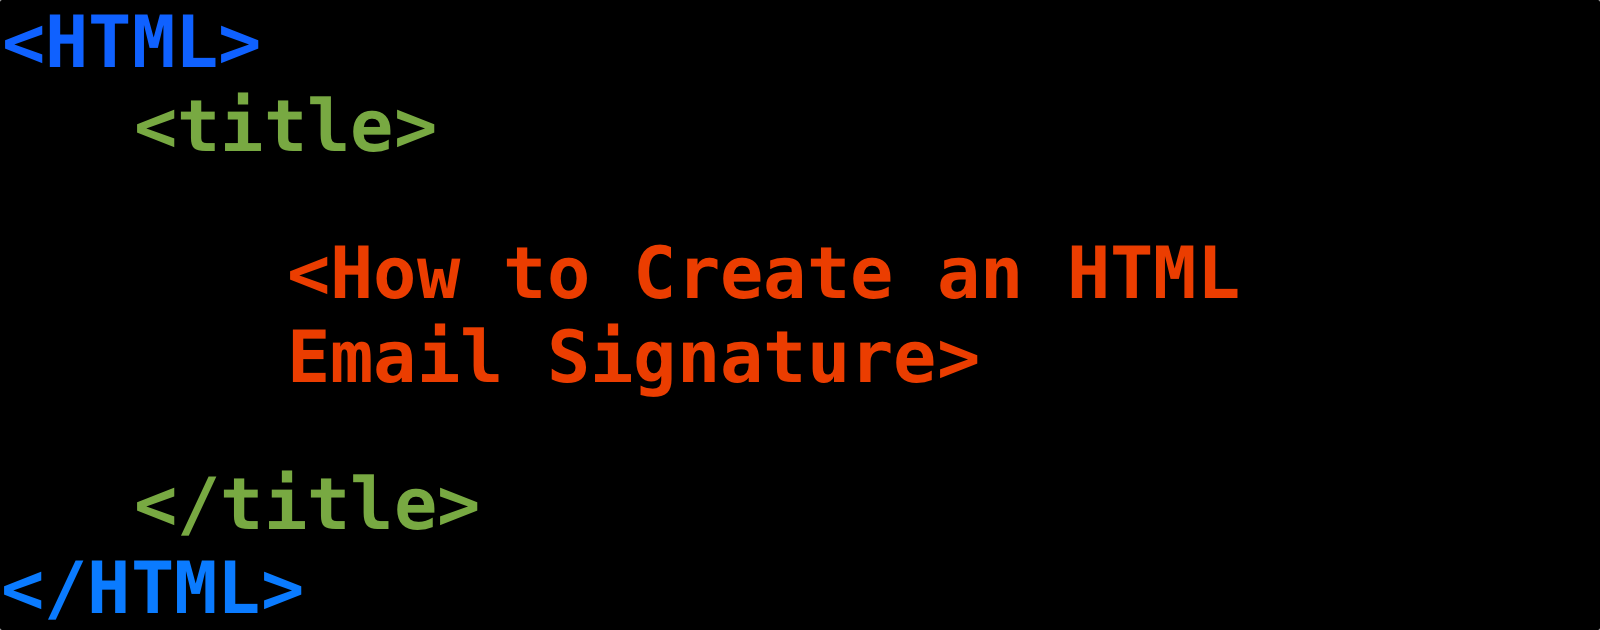 create a html email signature for mac os x yosemite